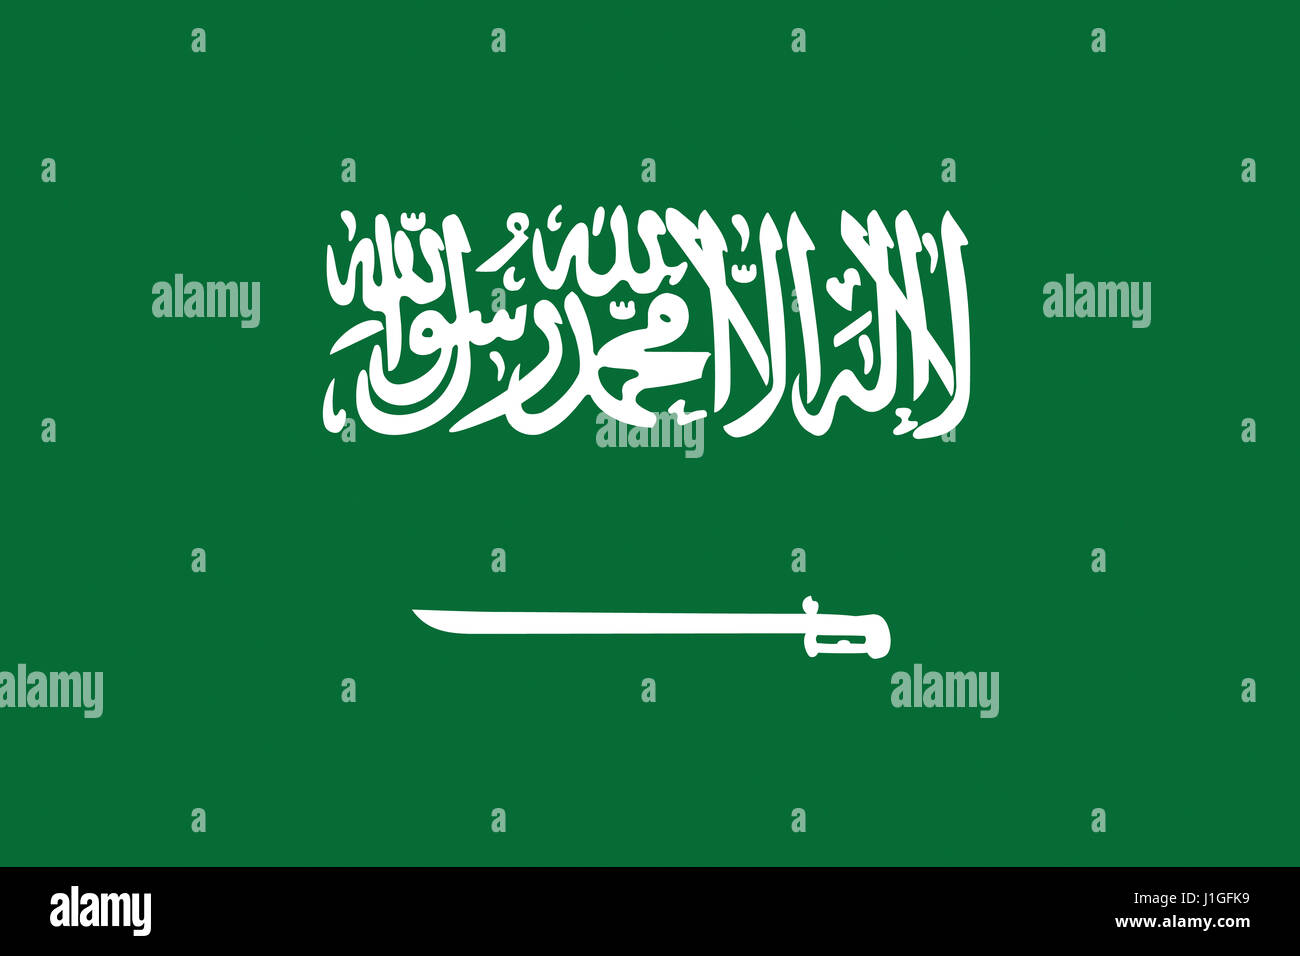 Illustration of the flag of Saudi Arabia Stock Photo